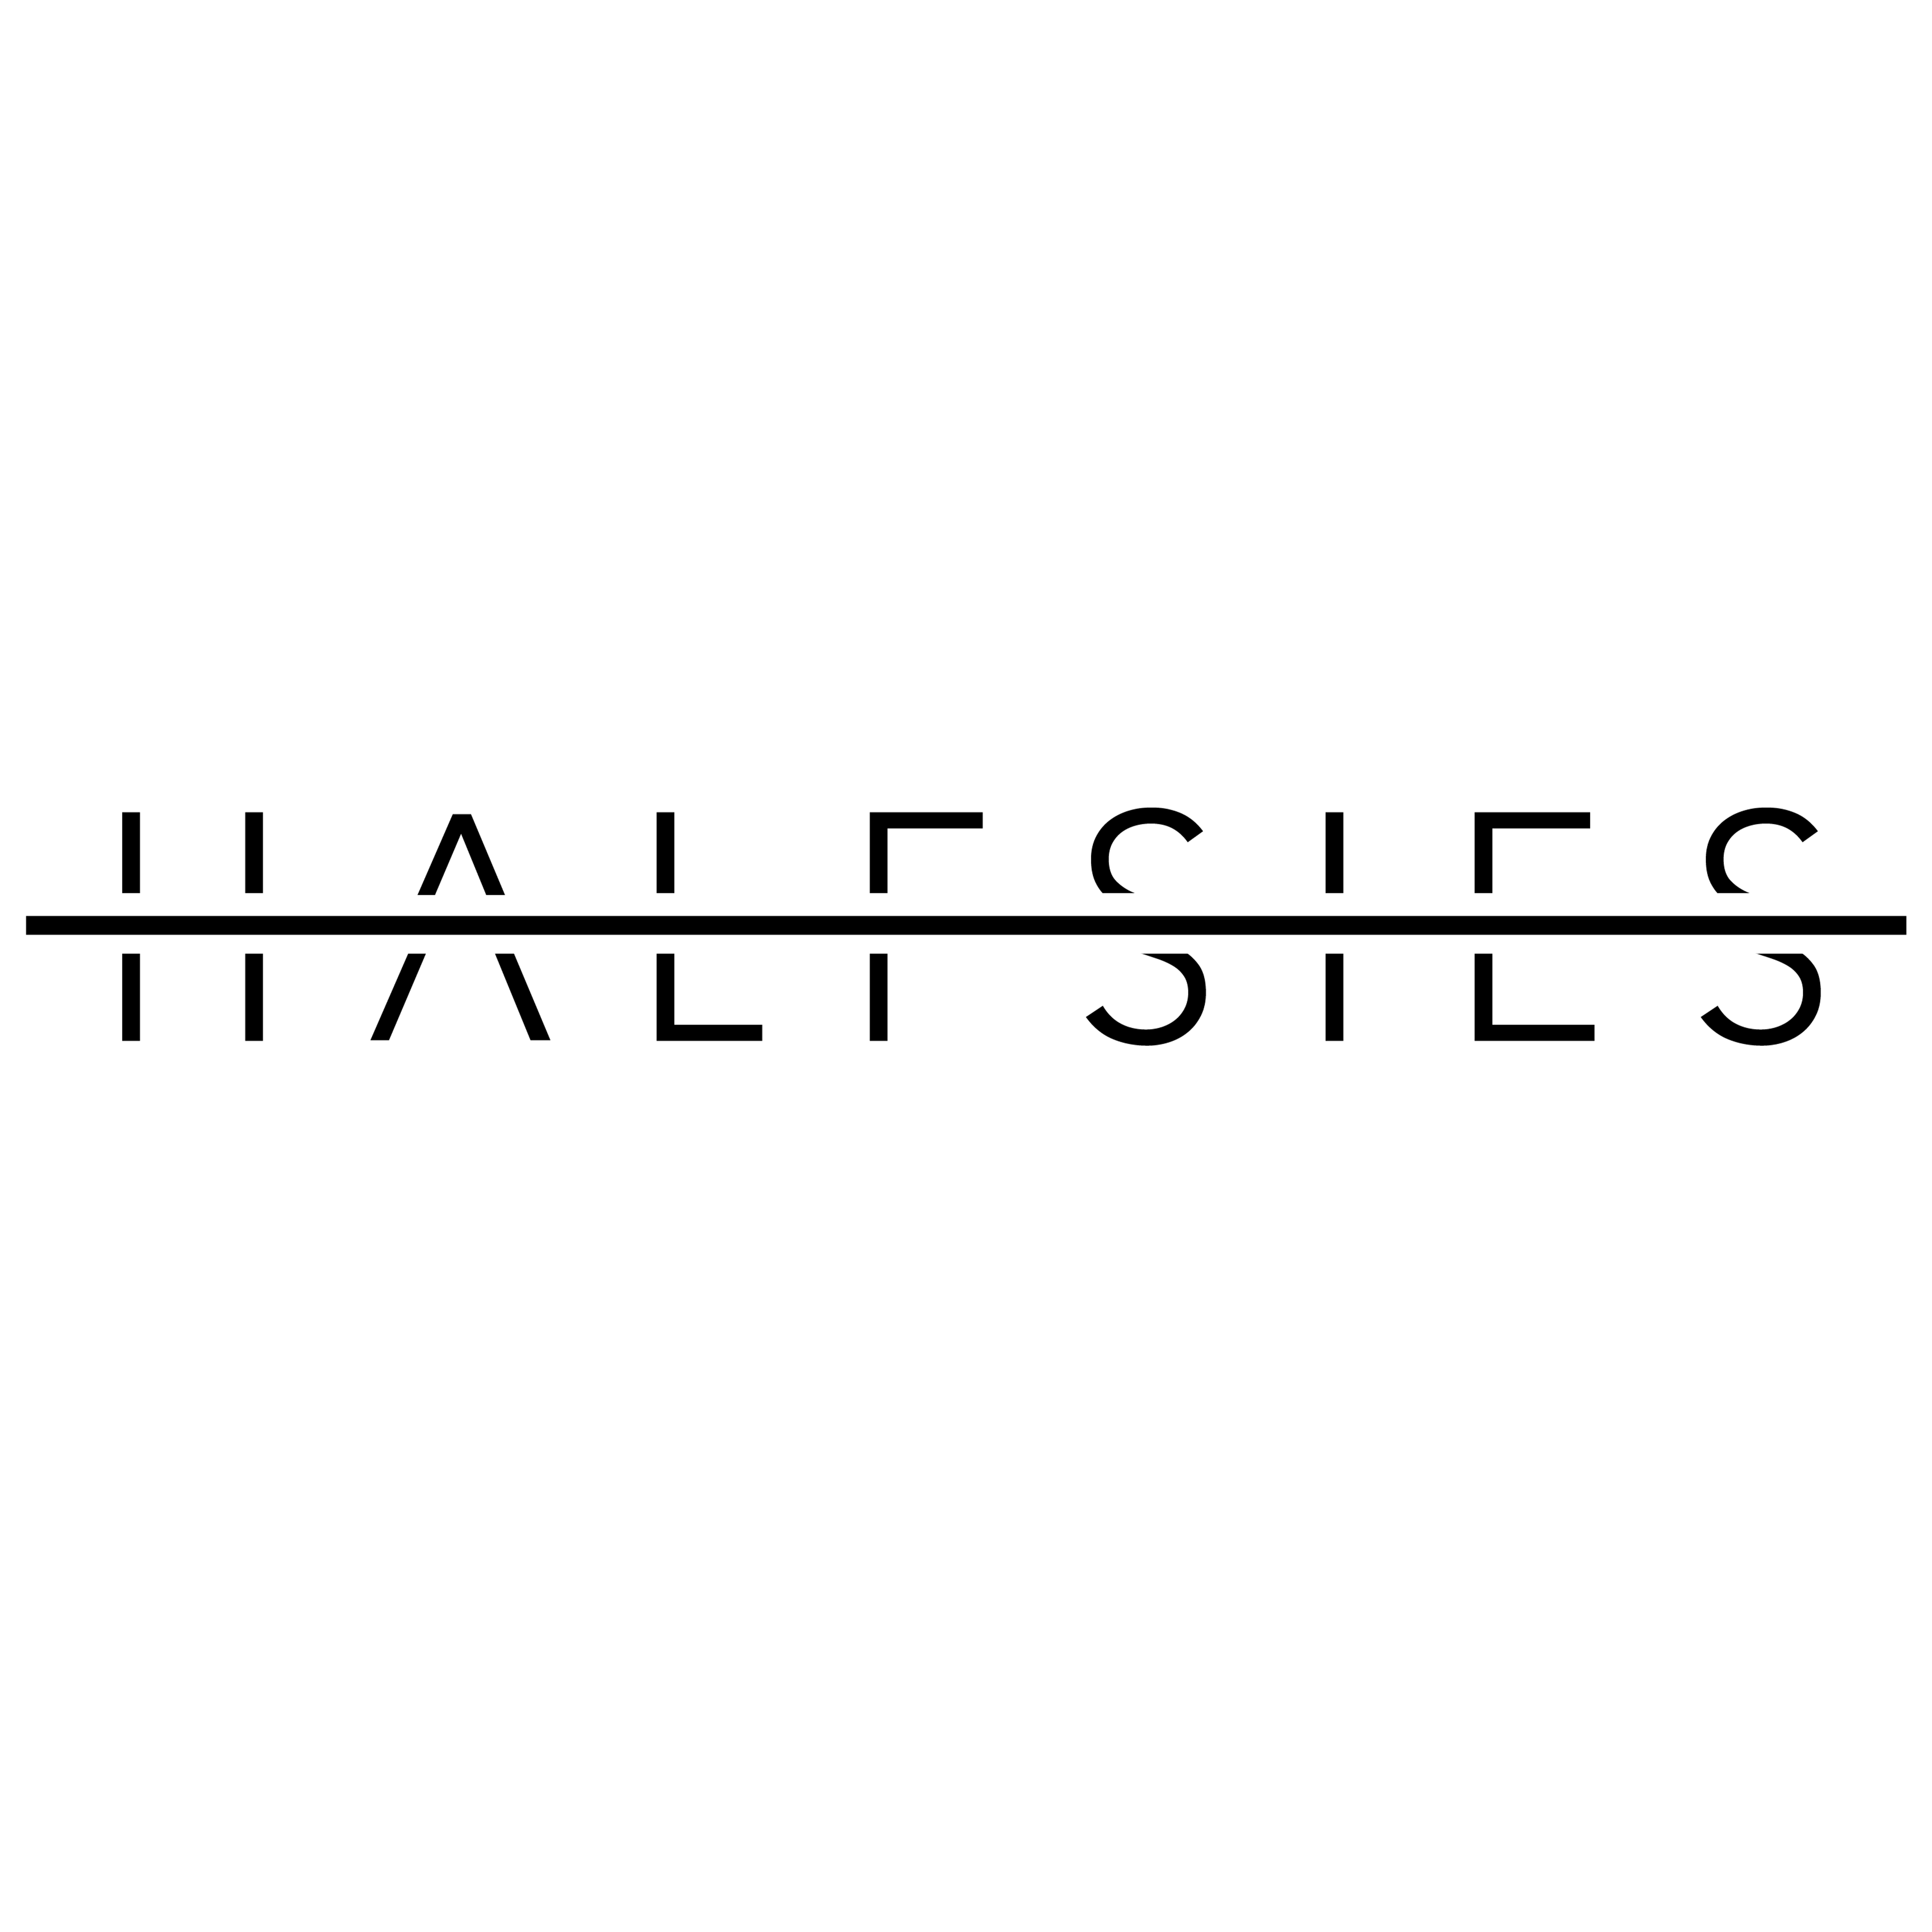 Introducing: Halfsies!